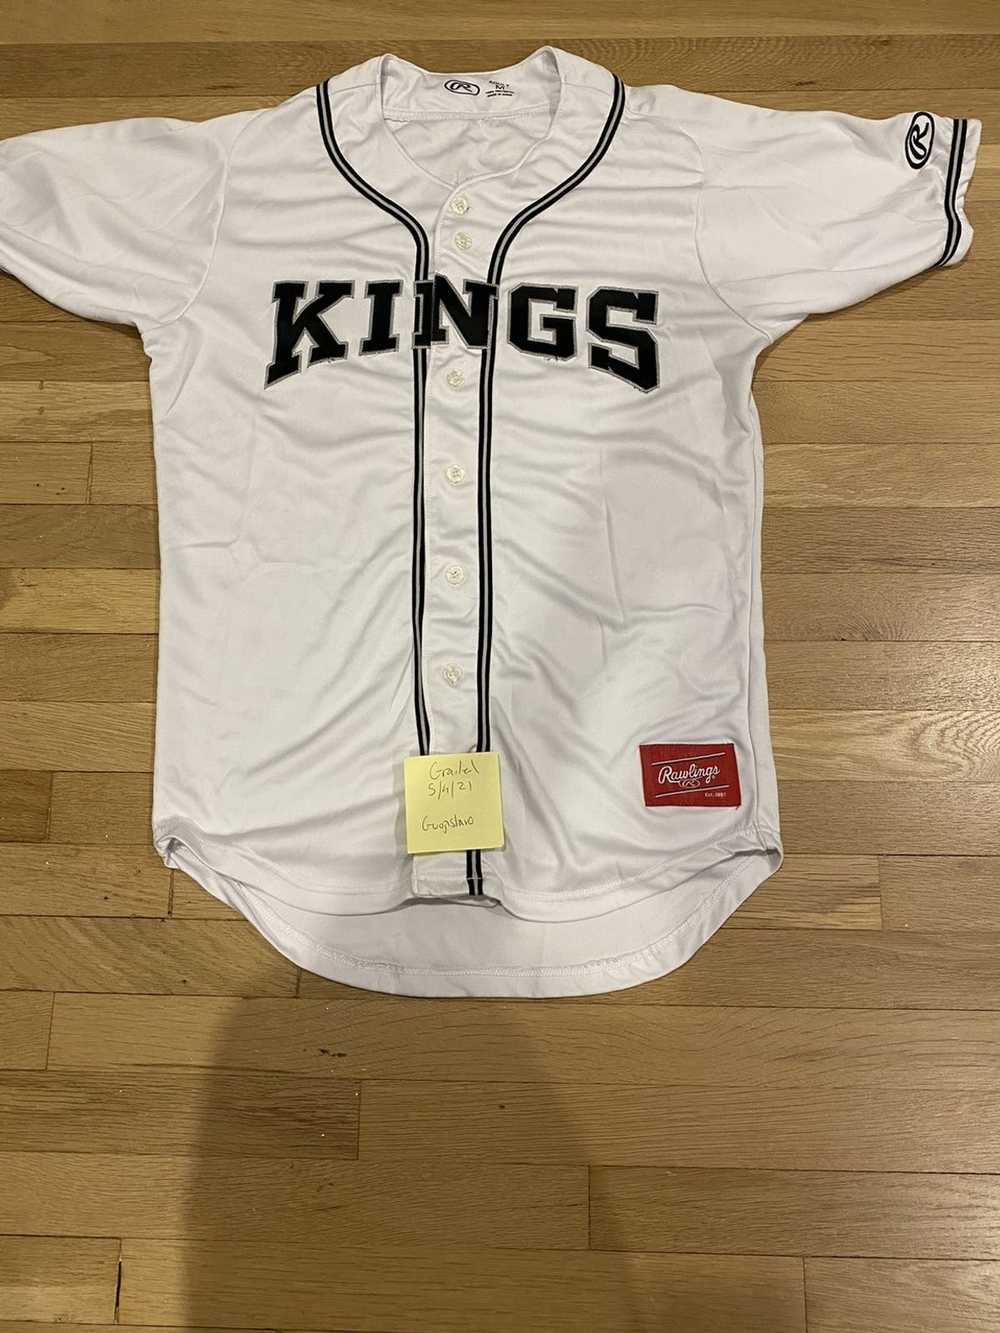 Jersey Kings pinstripe baseball jersey - image 1